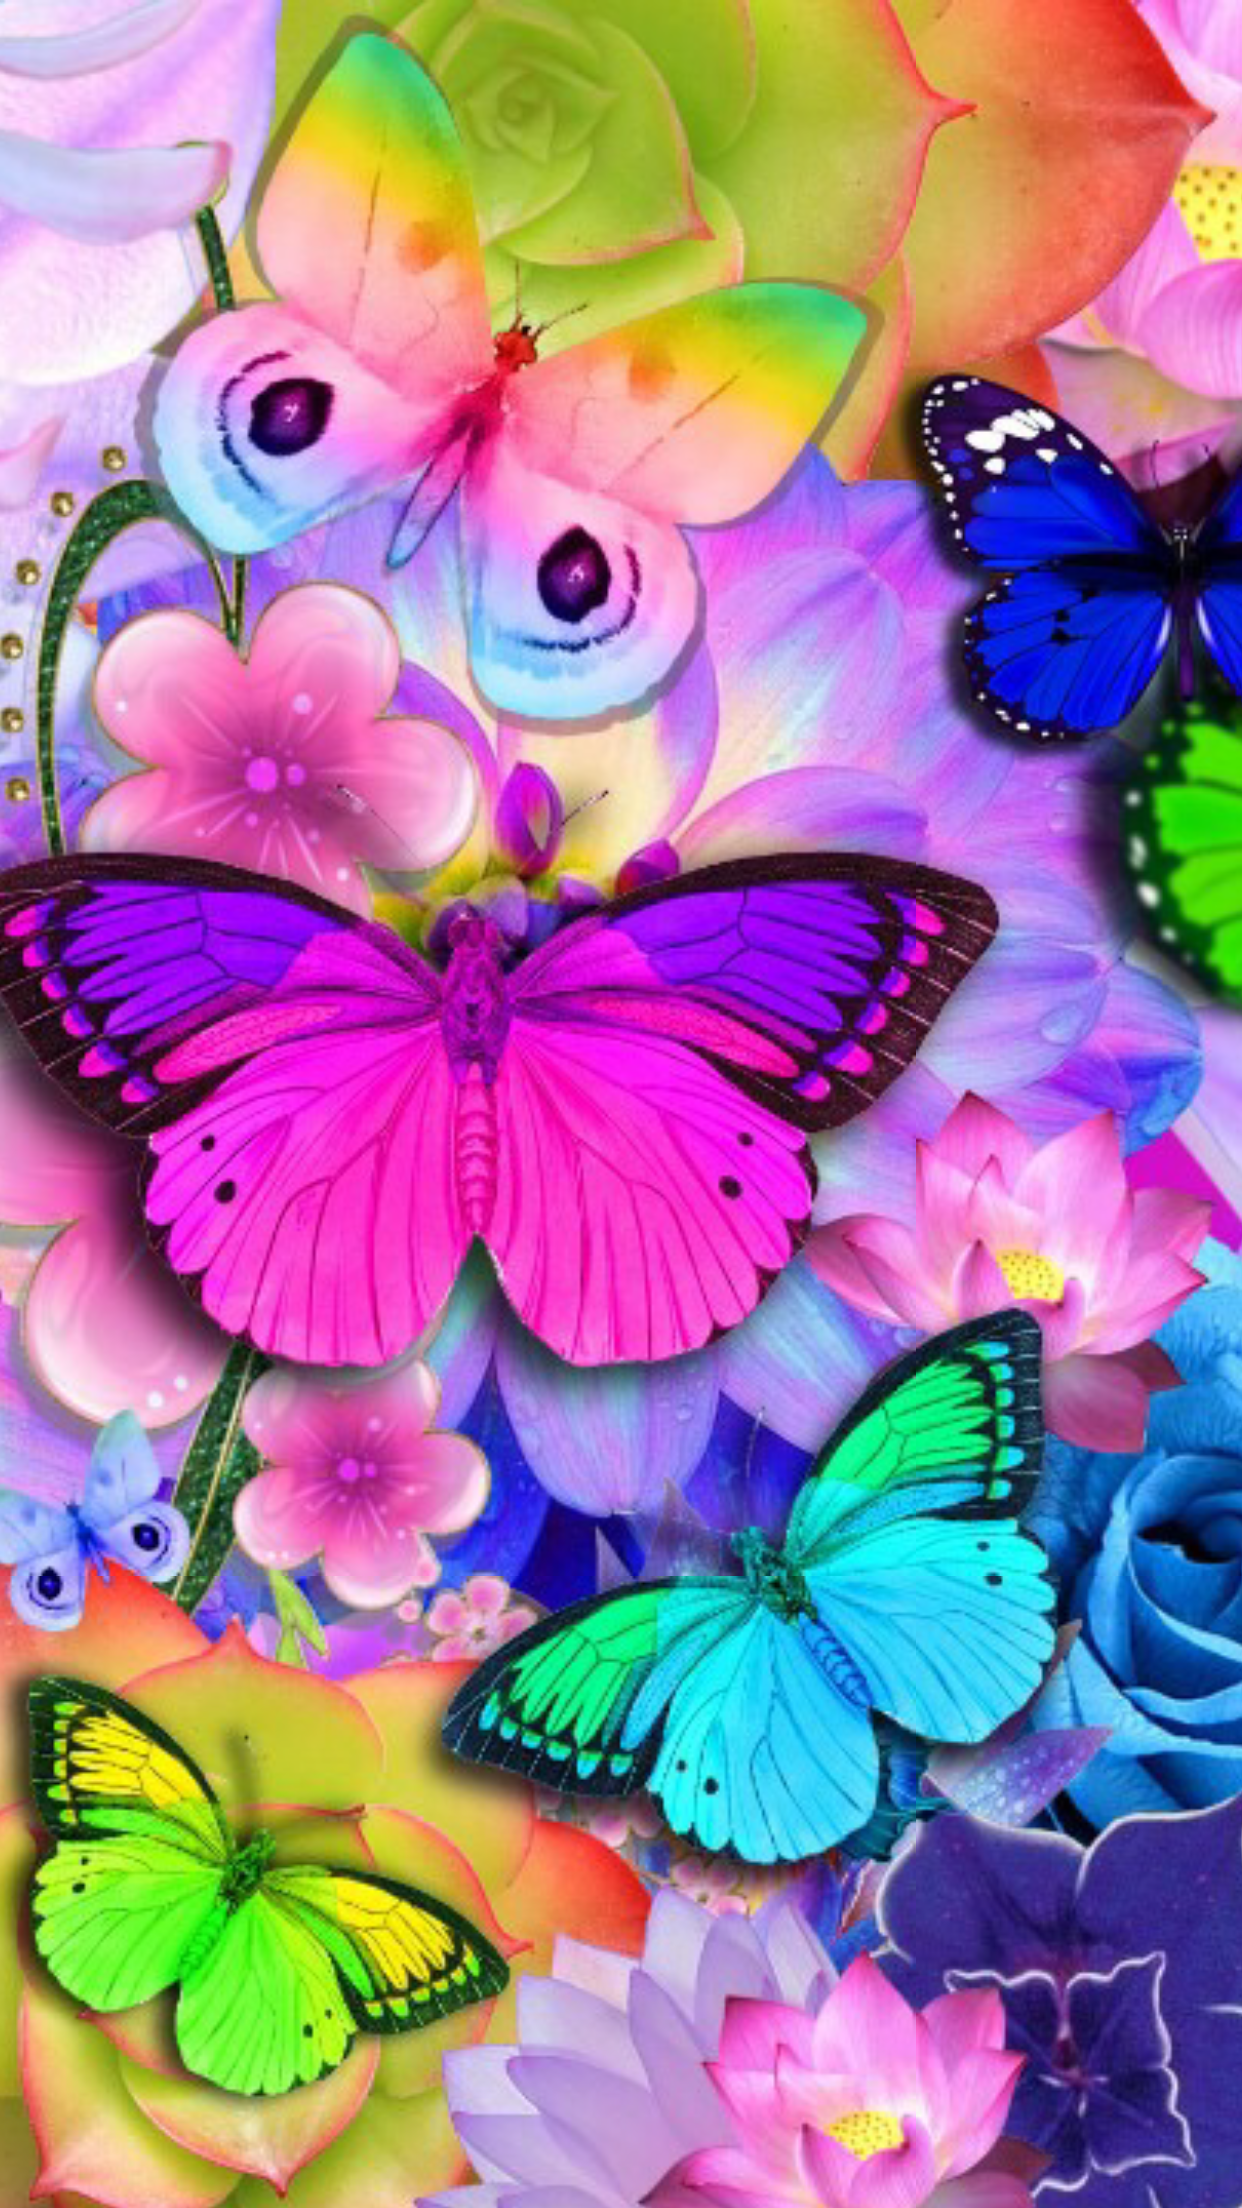 Pink Butterfly Artist Unknown